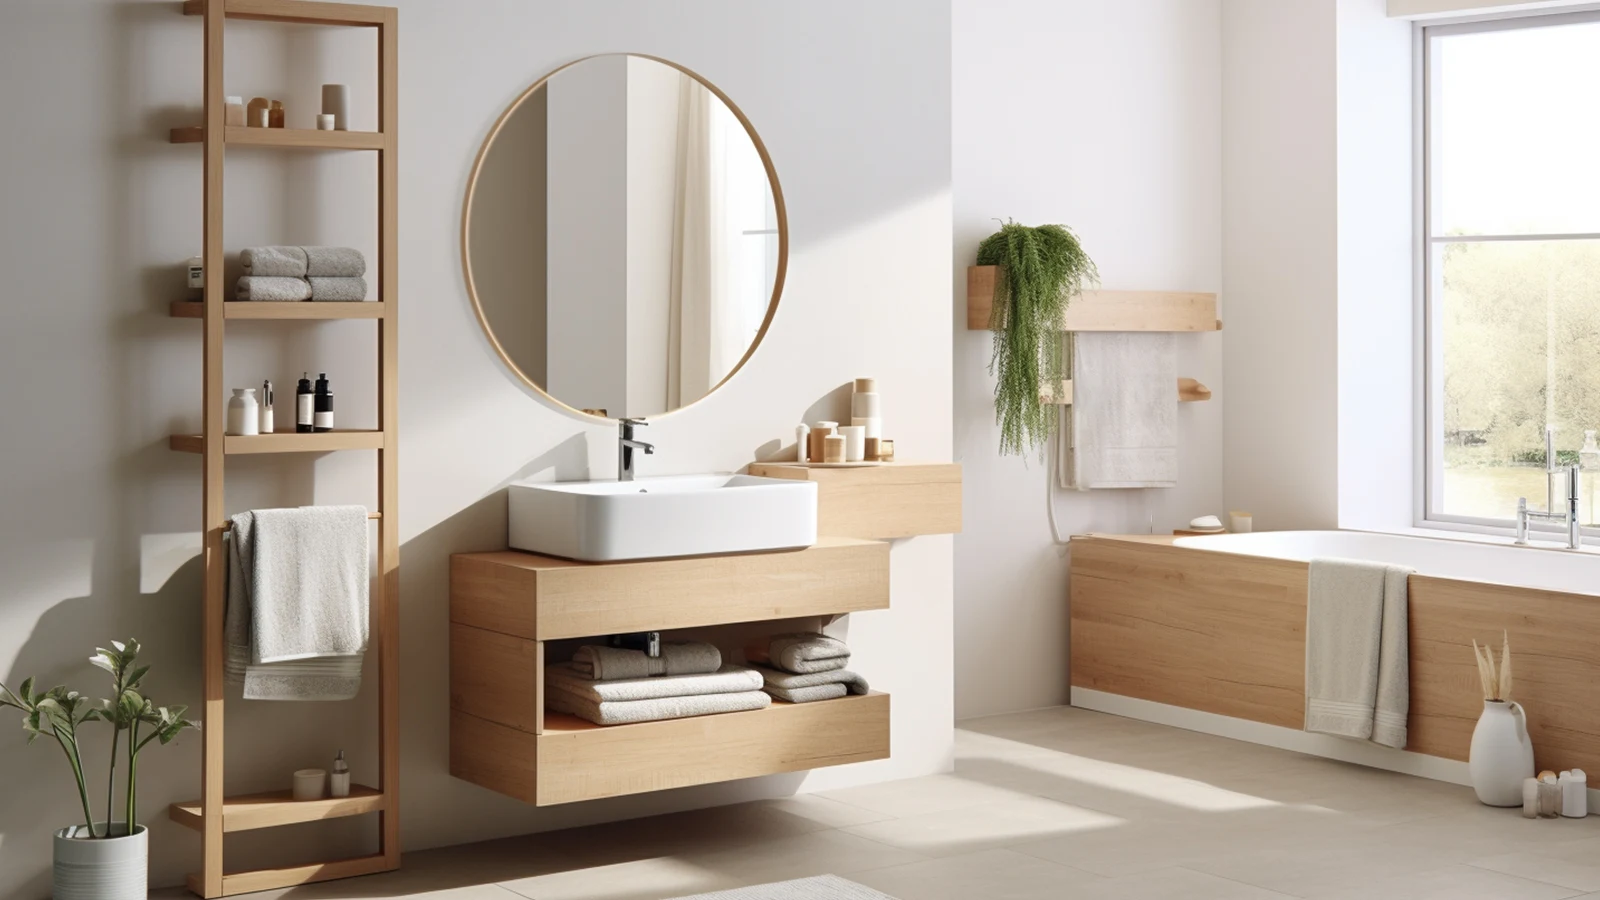 Small bathroom counter decorating ideas: a modern bathroom with wooden shelves and a bathtub.